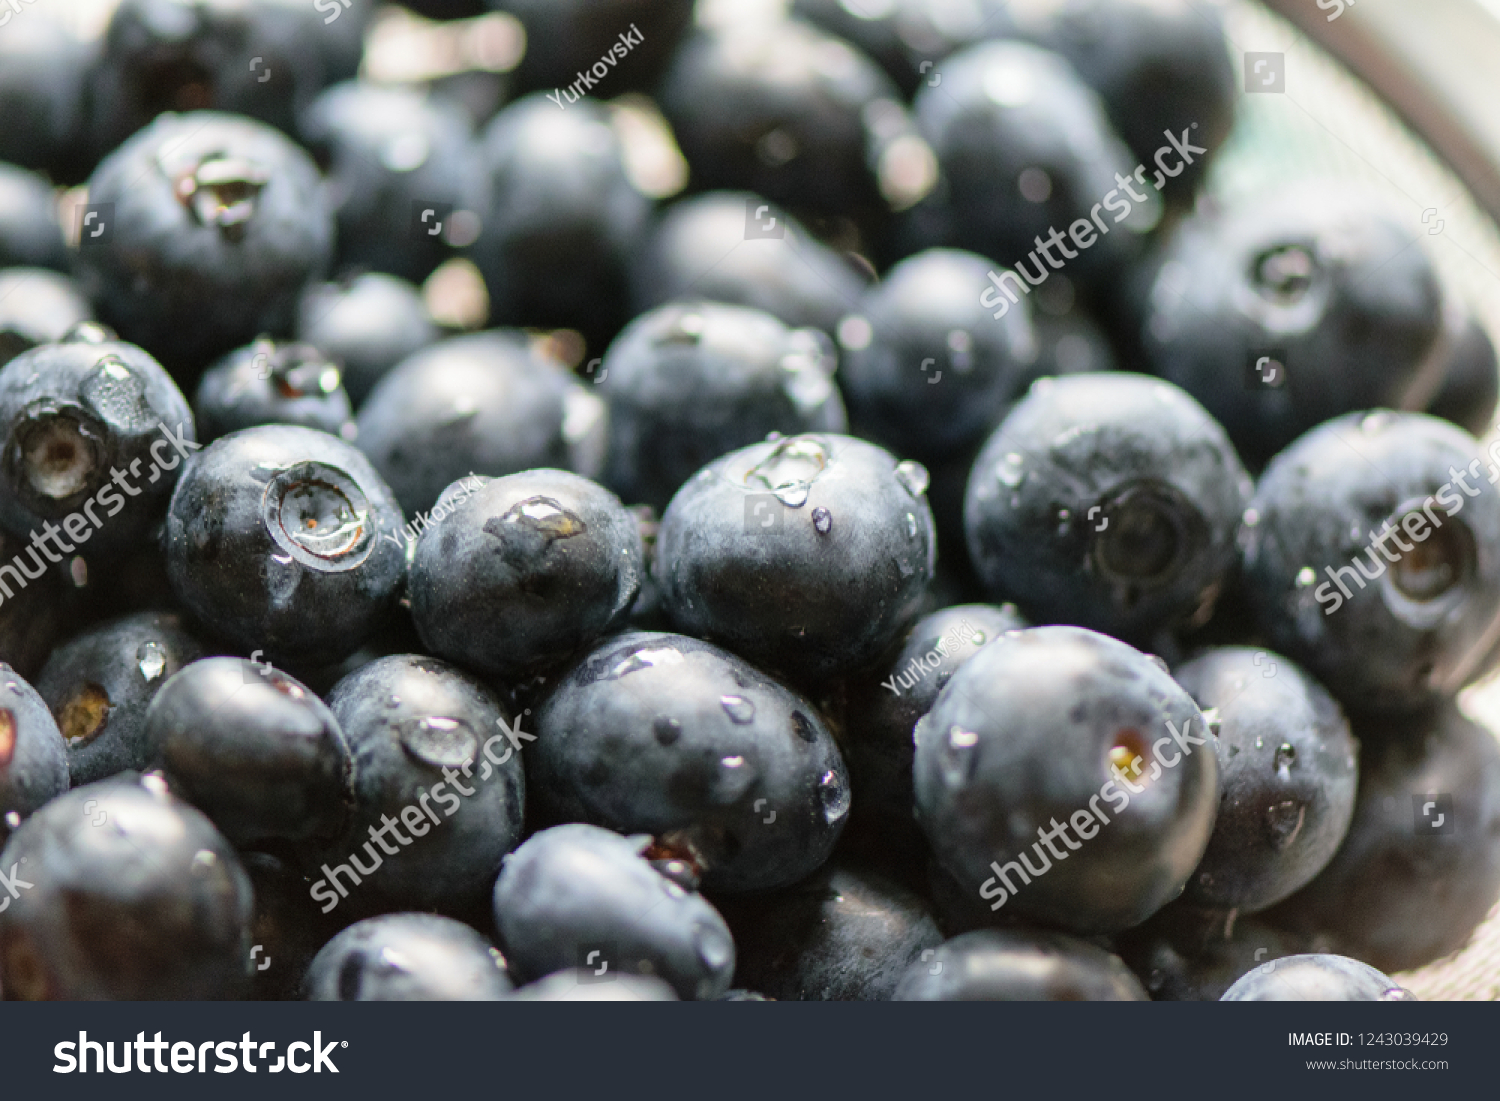 Ripe blueberry background